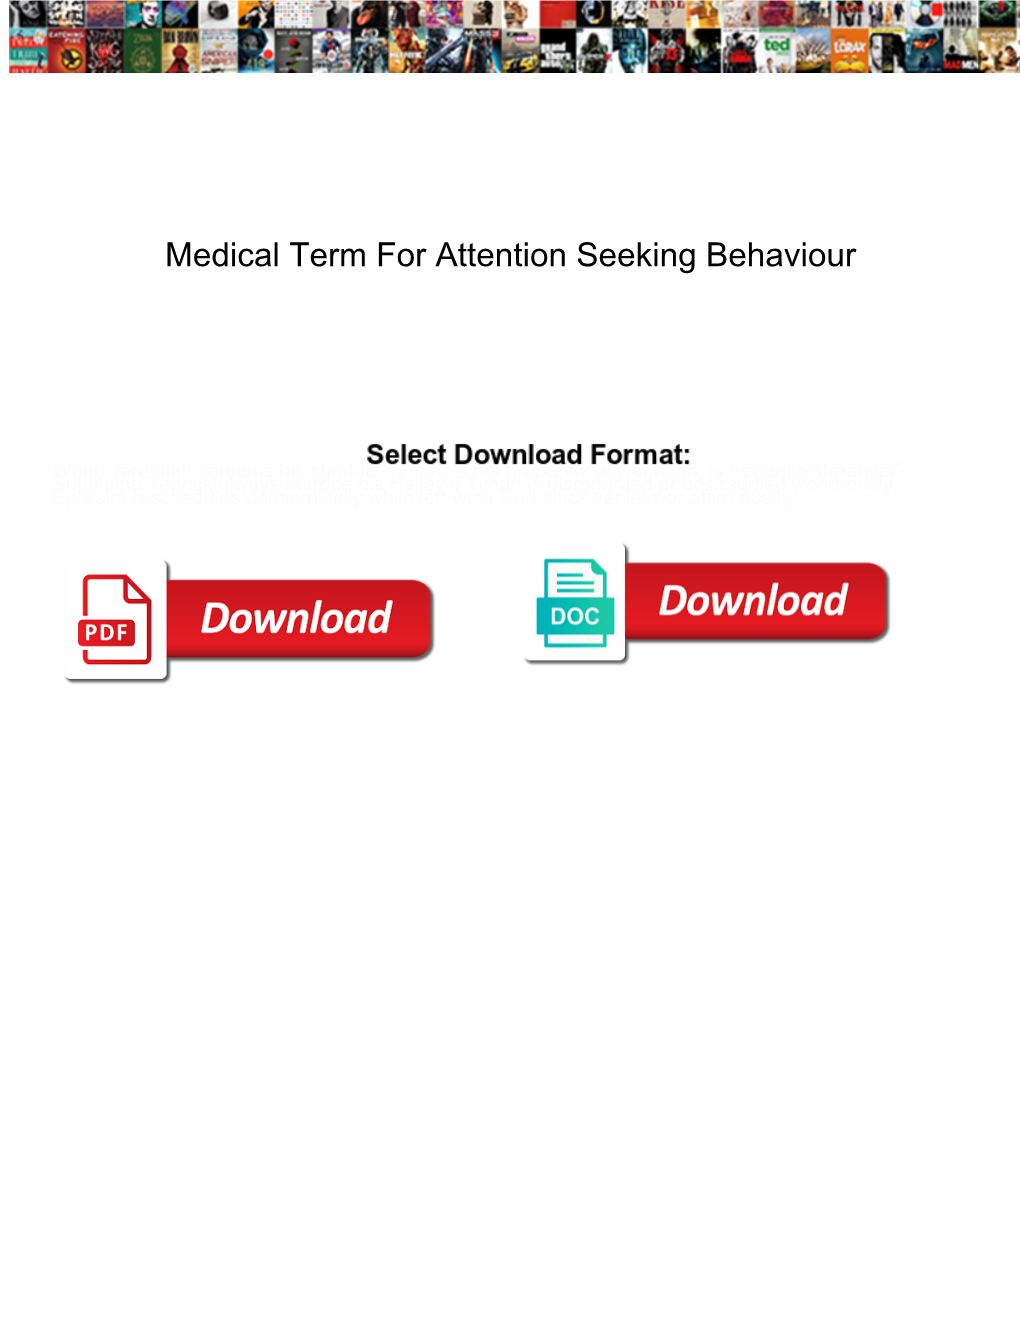 Medical Term for Attention Seeking Behaviour